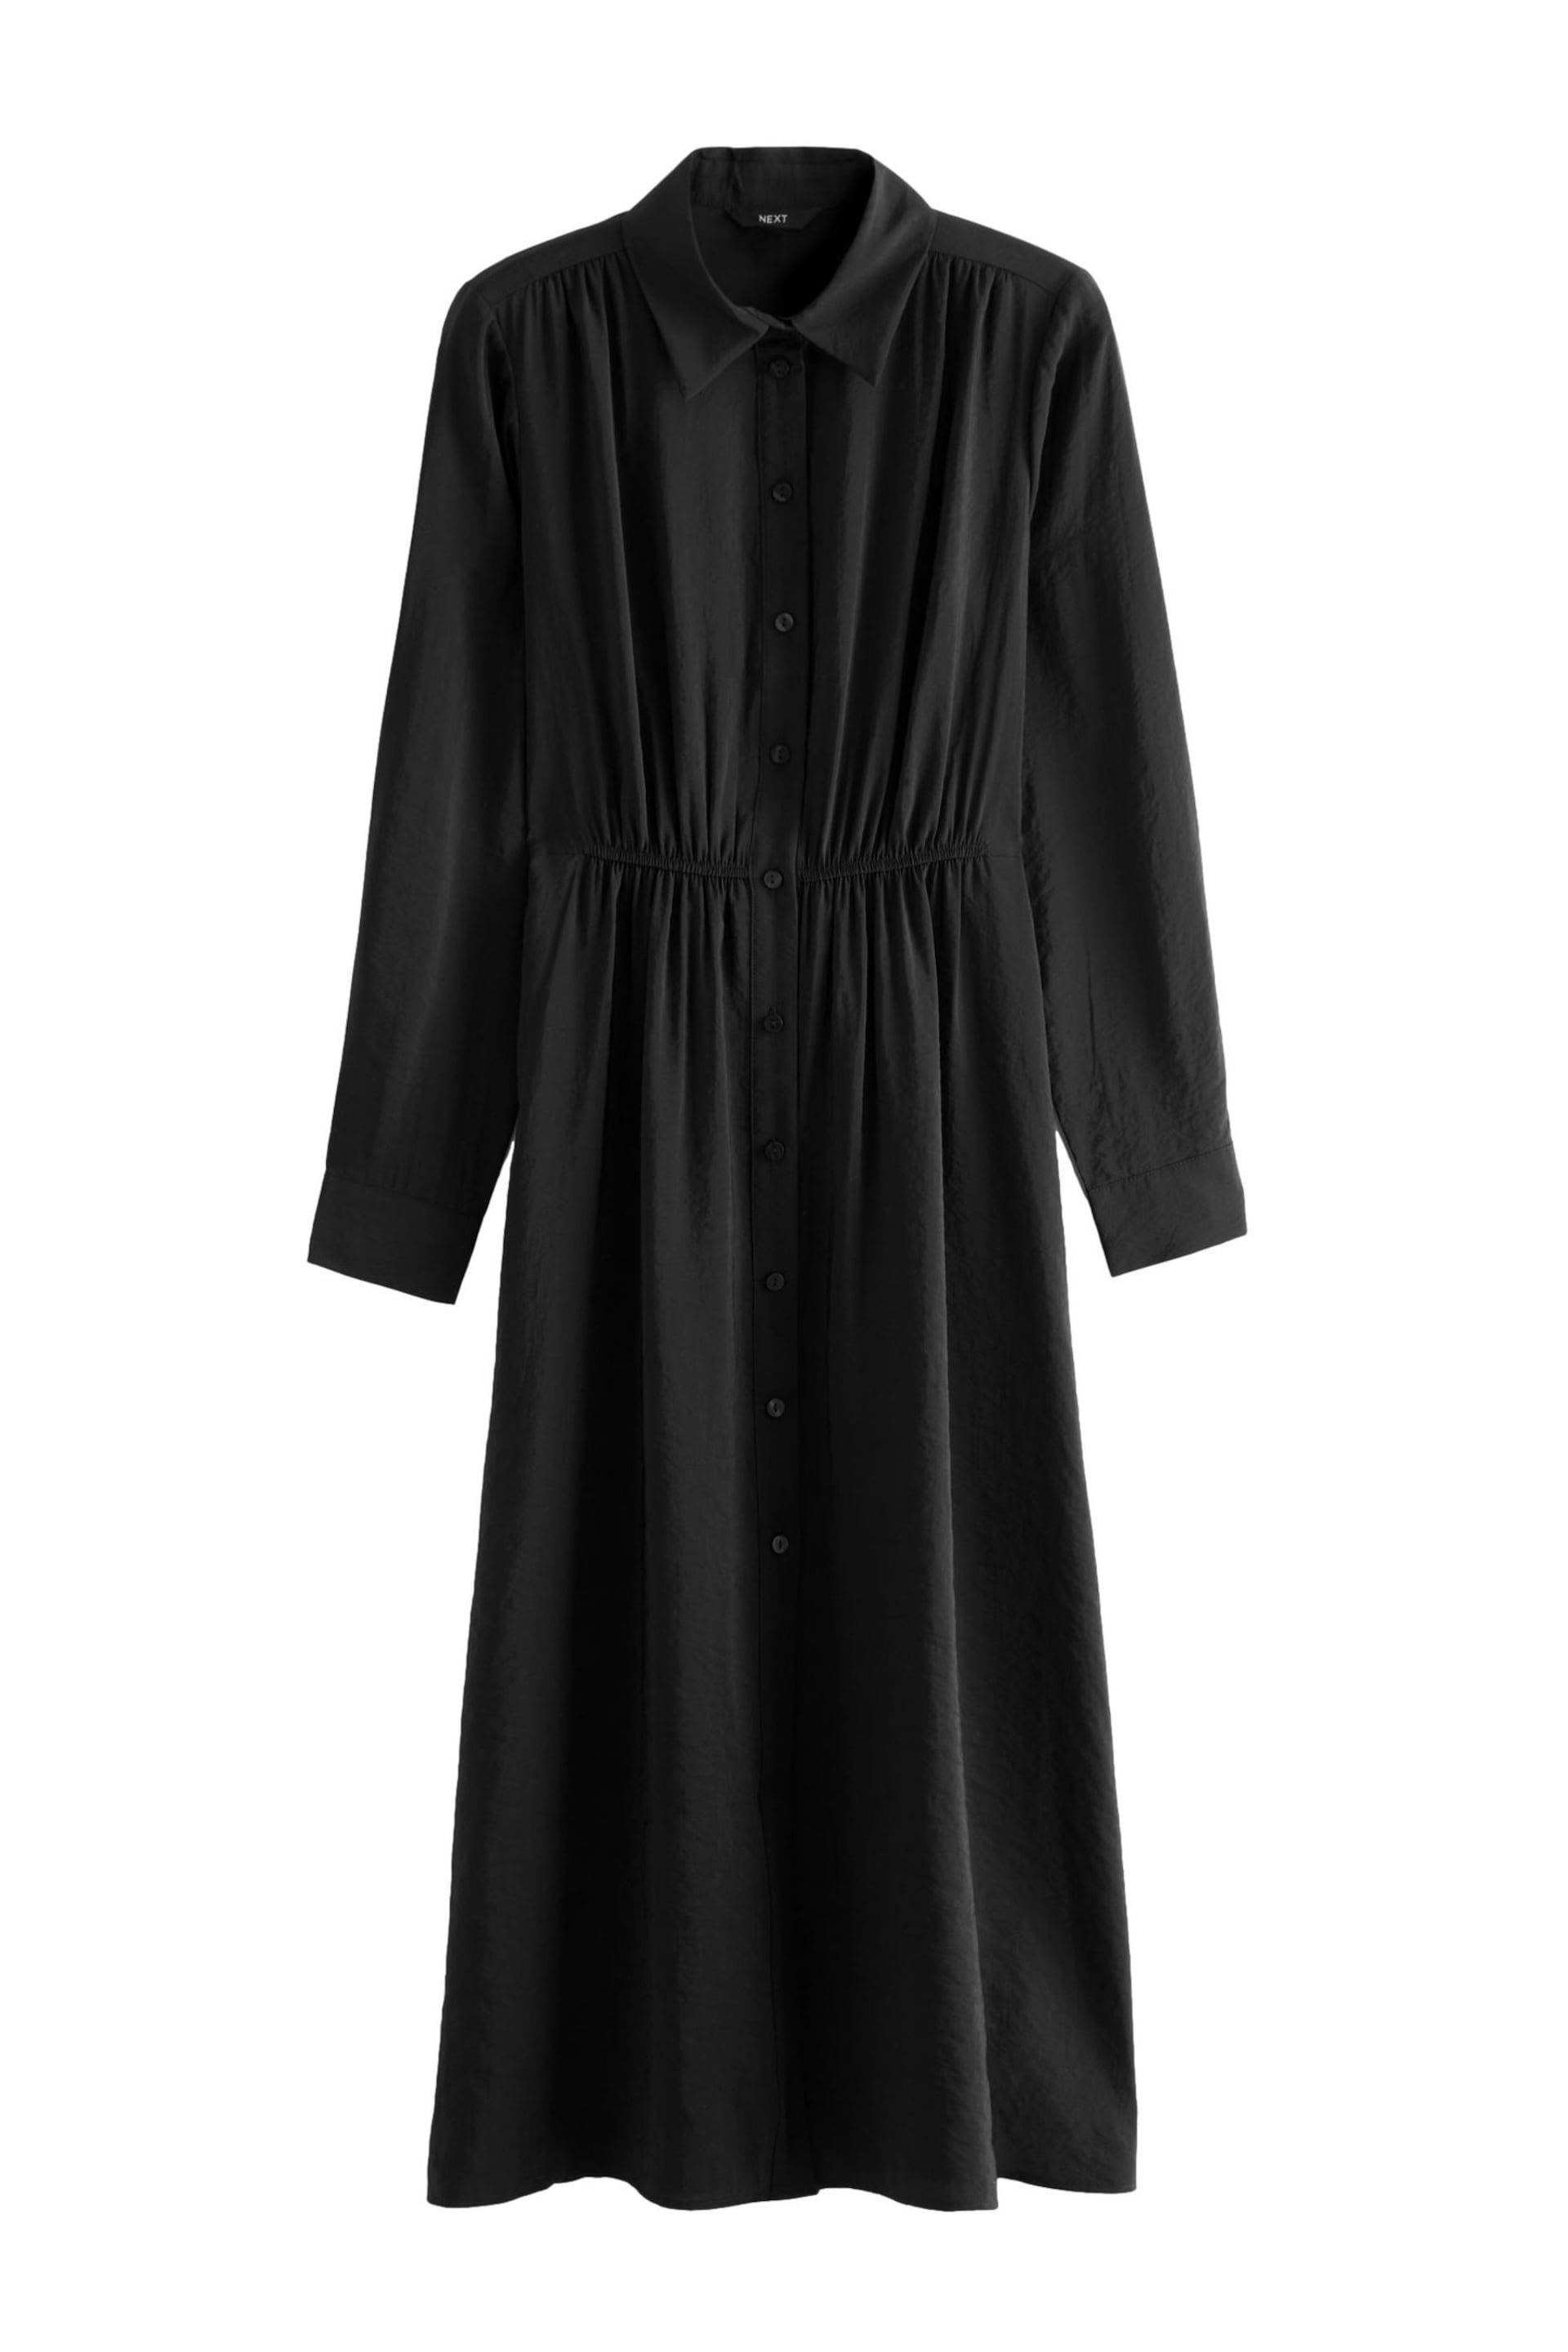 Black Long Sleeve Button Through Elastic Waist Midi Shirt Dress - Image 5 of 6